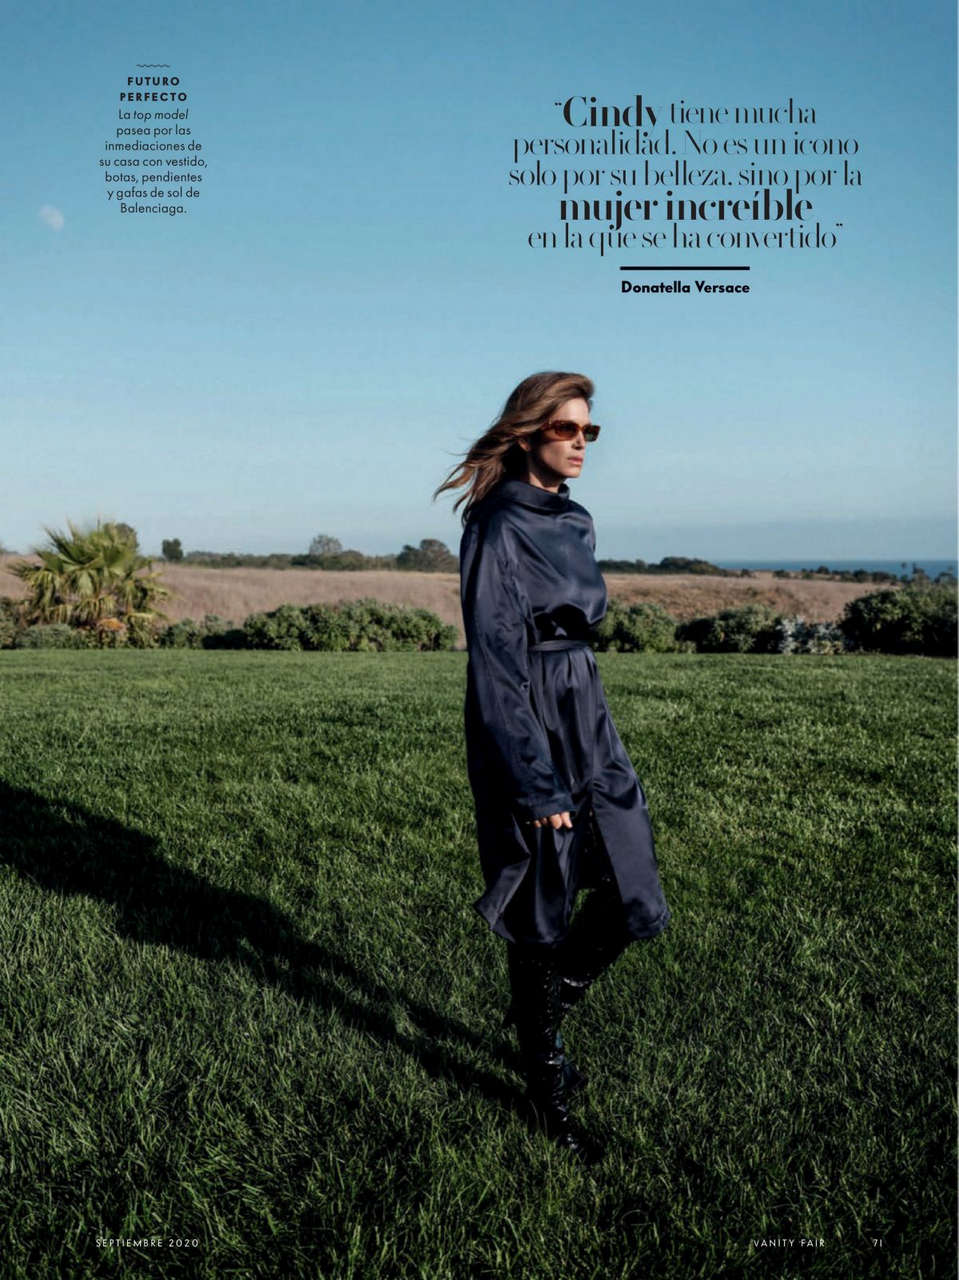 Cindy Crawford Vanity Fair Magazine Spain September